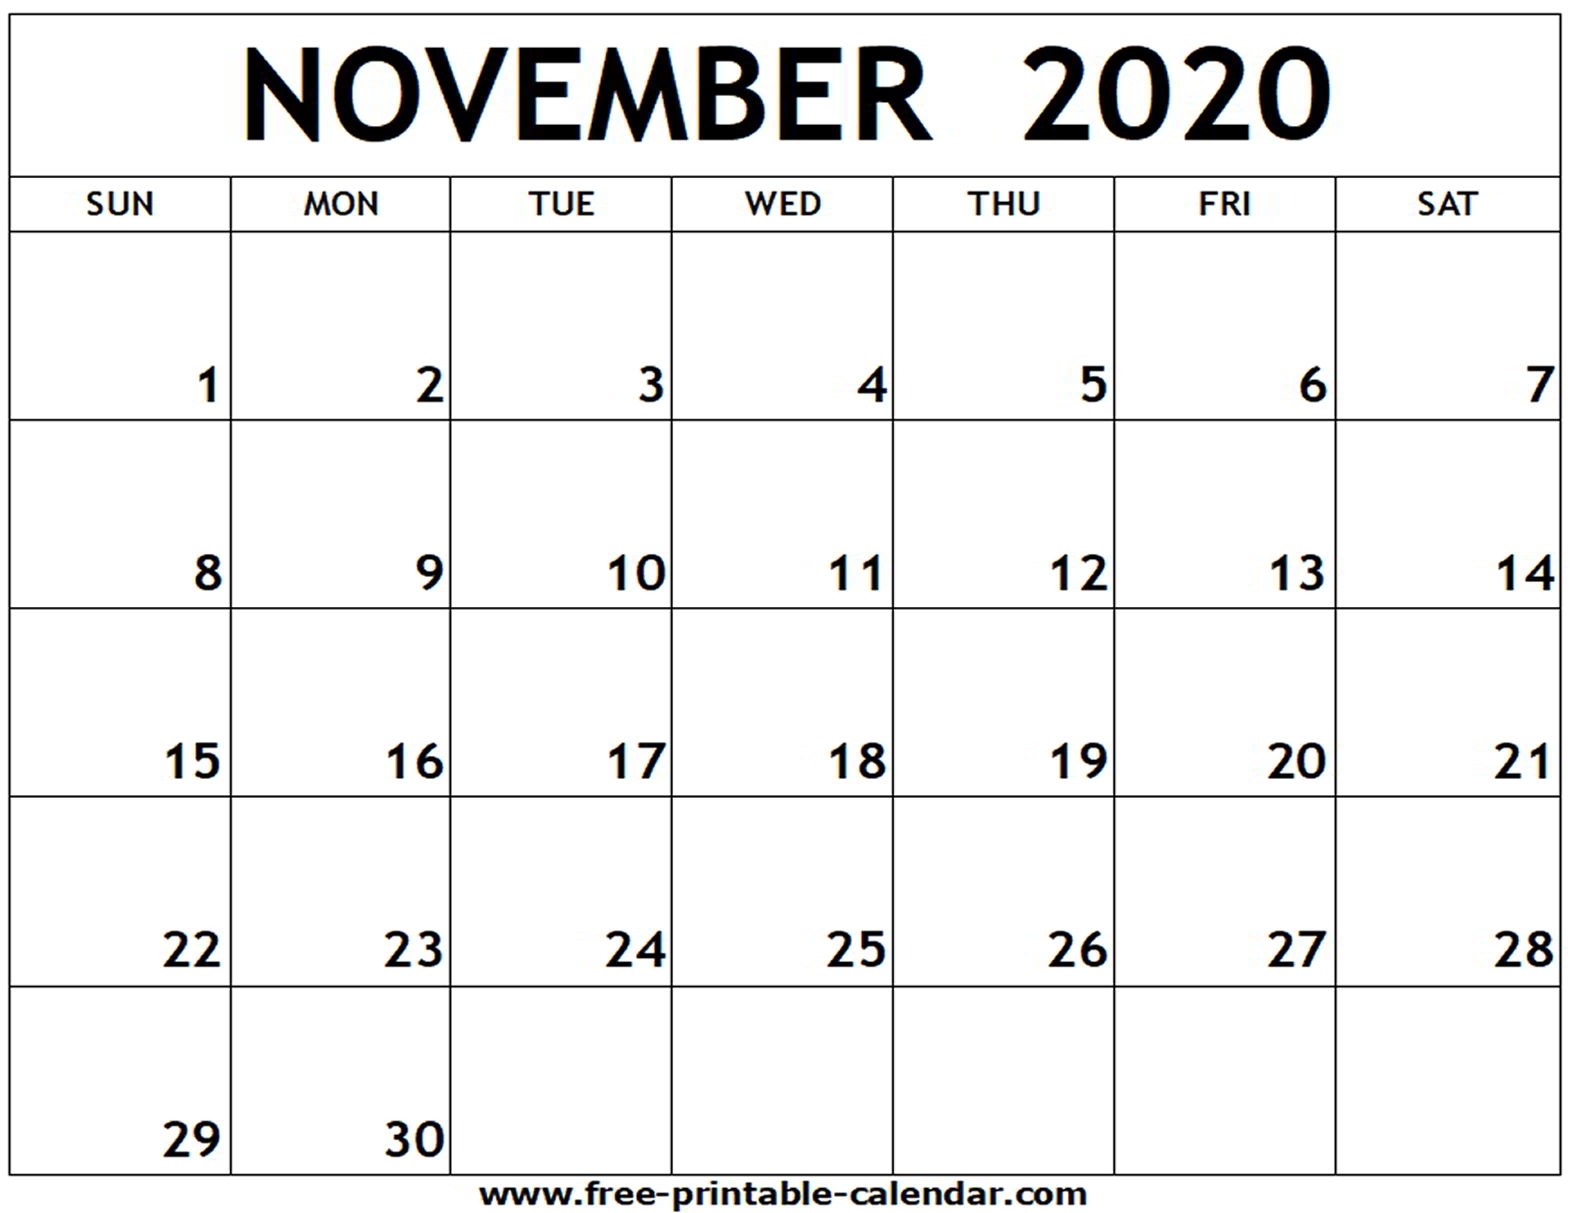 November 2020 Printable Calendar - Free-Printable-Calendar